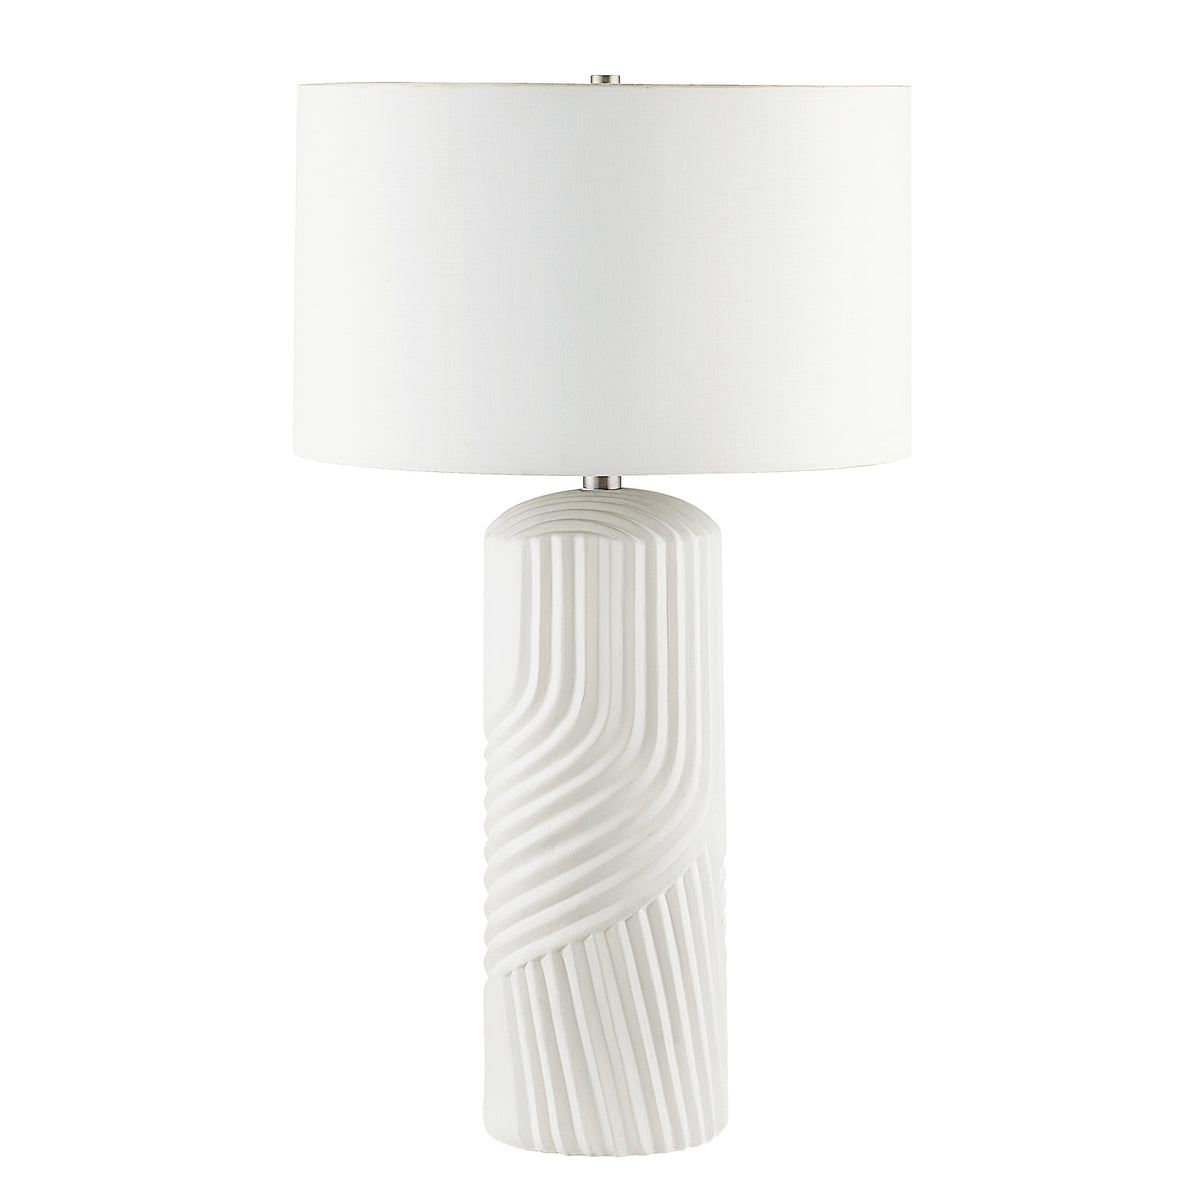 Renwil - VALERIE Table Lamp - LPT1218 - White